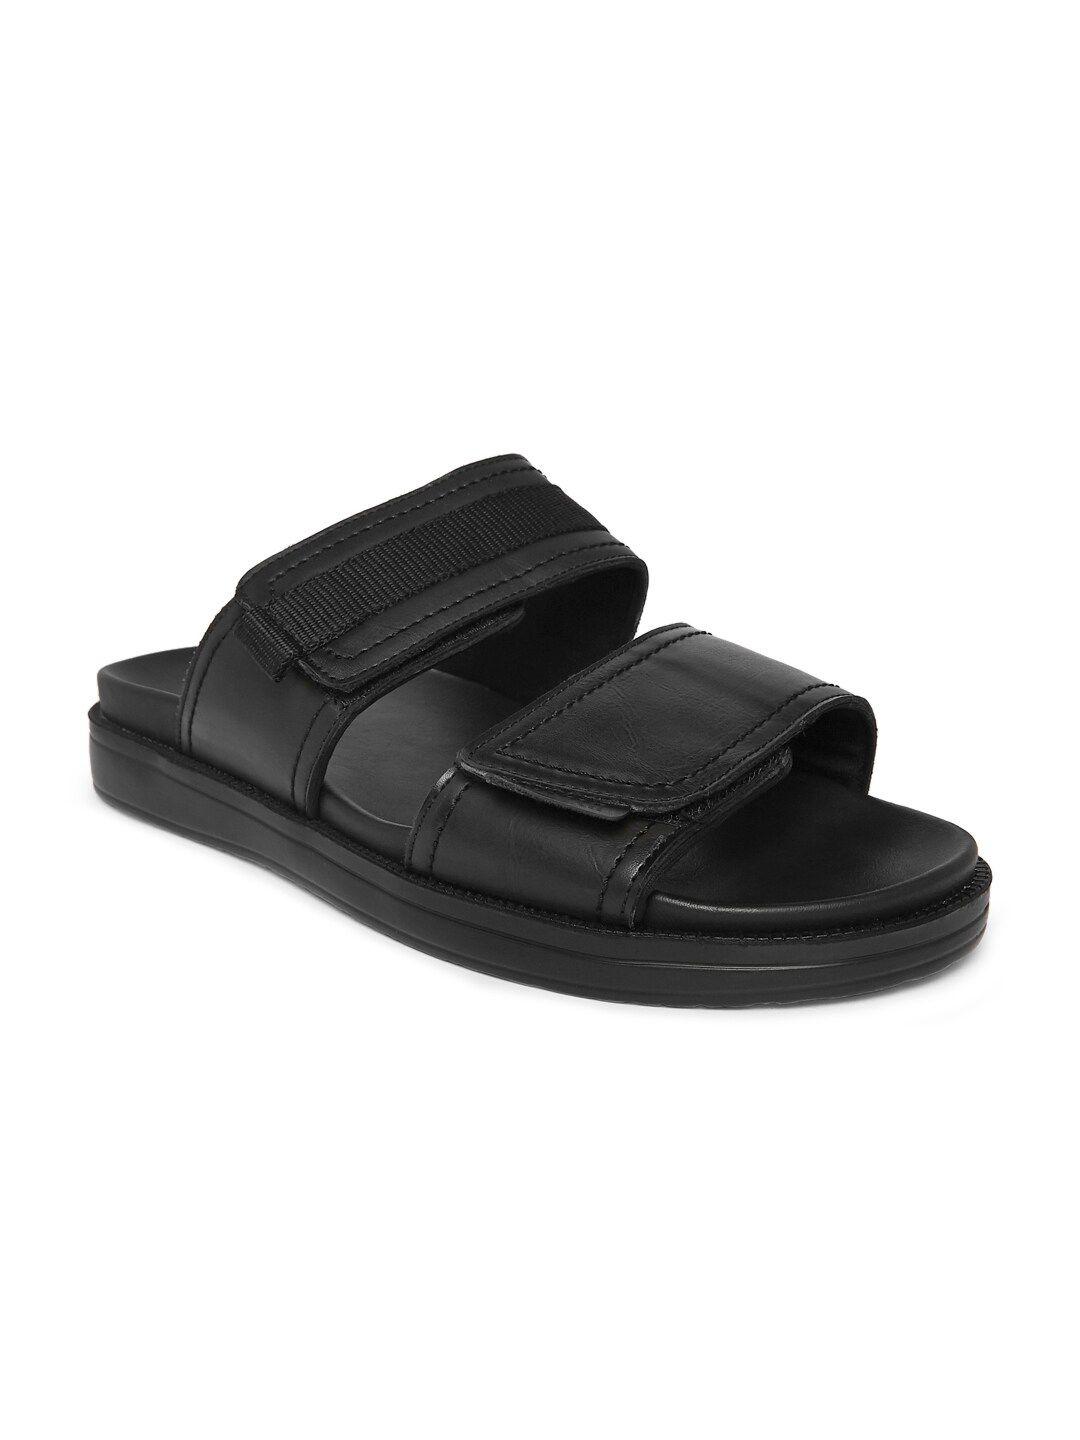 byford by pantaloons men black pu comfort sandals